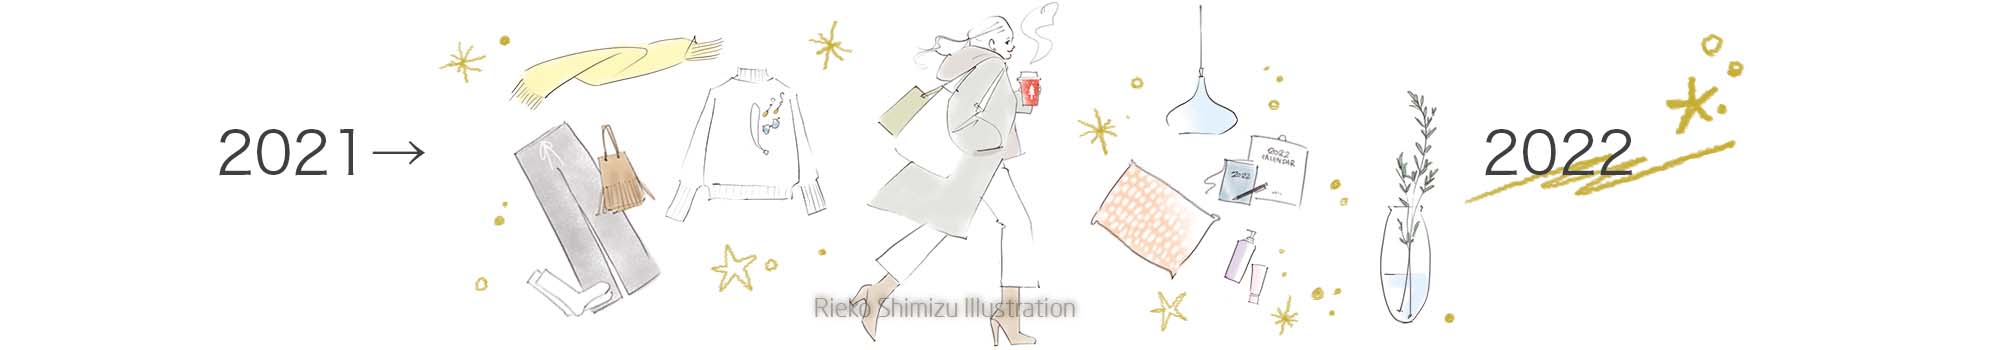 Rieko shimizu illustration